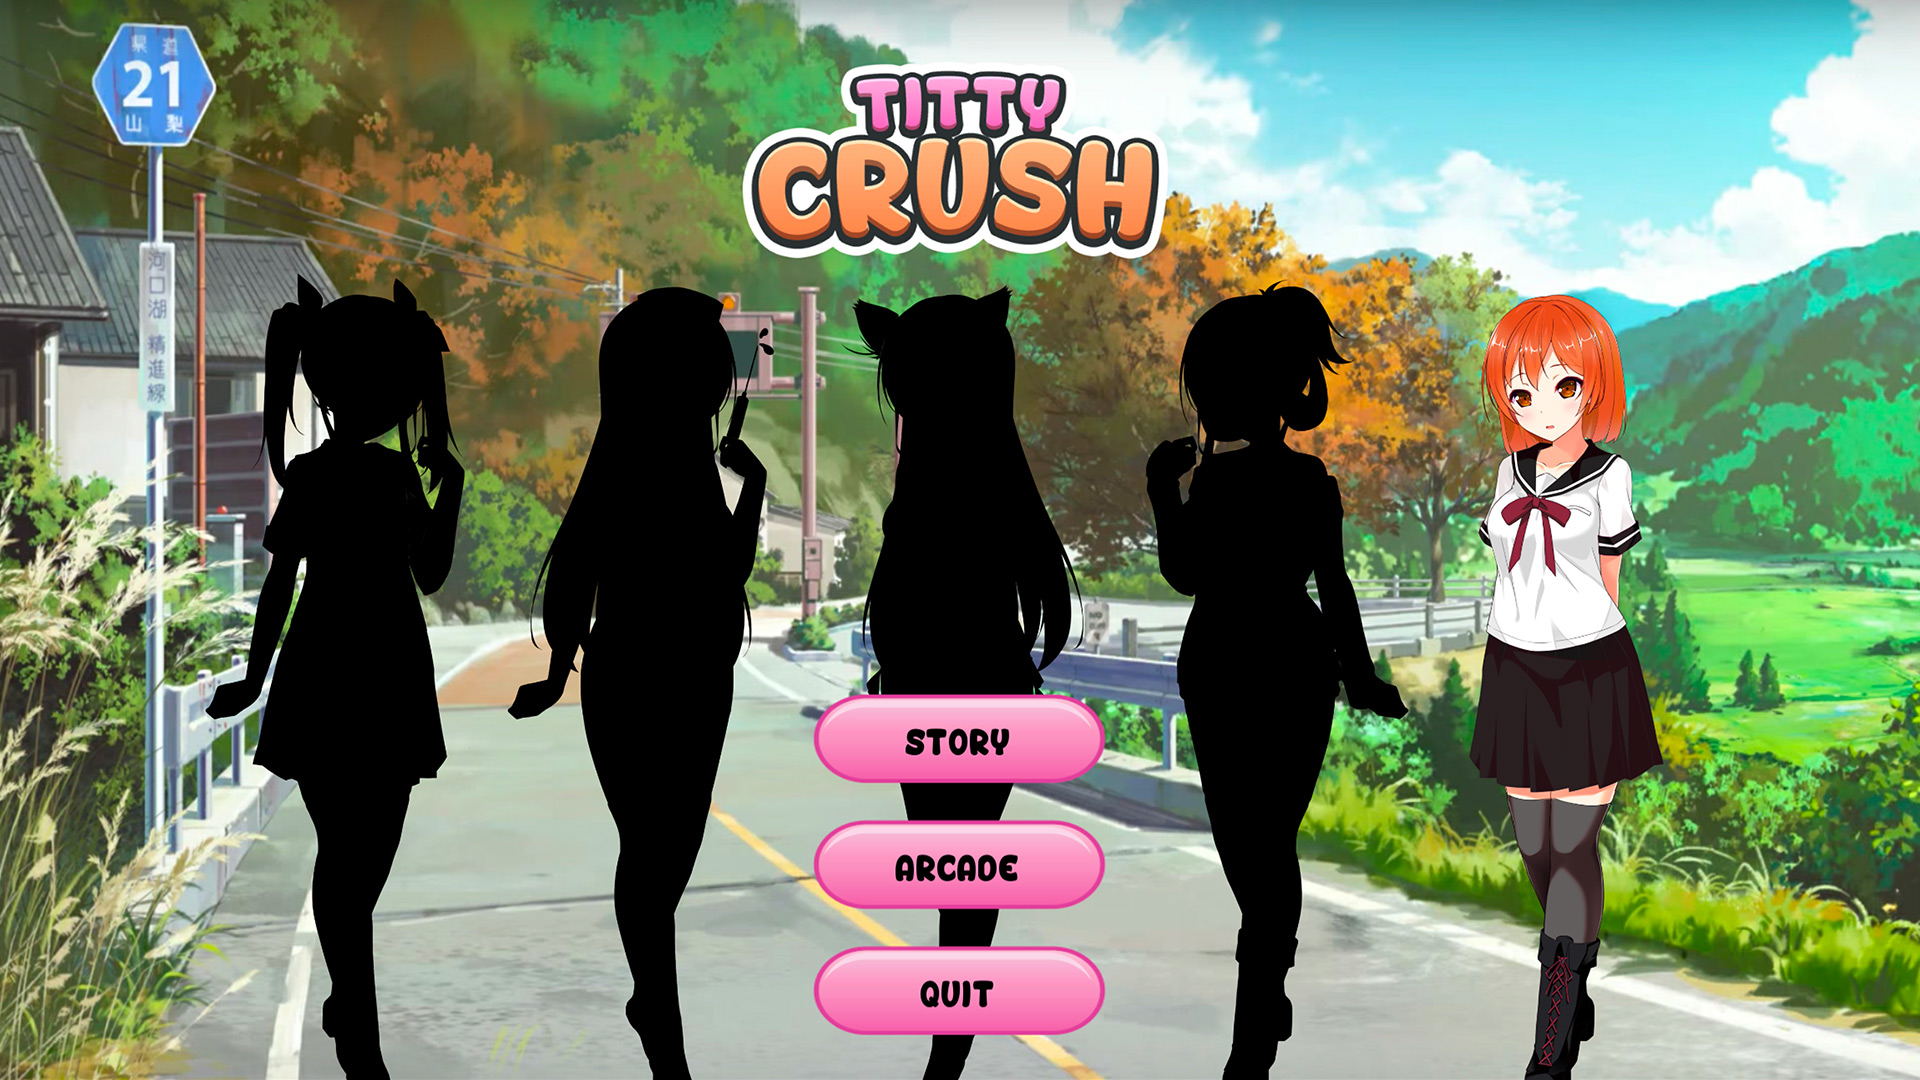 Titty Crush Pc Game Impulse Gamer 